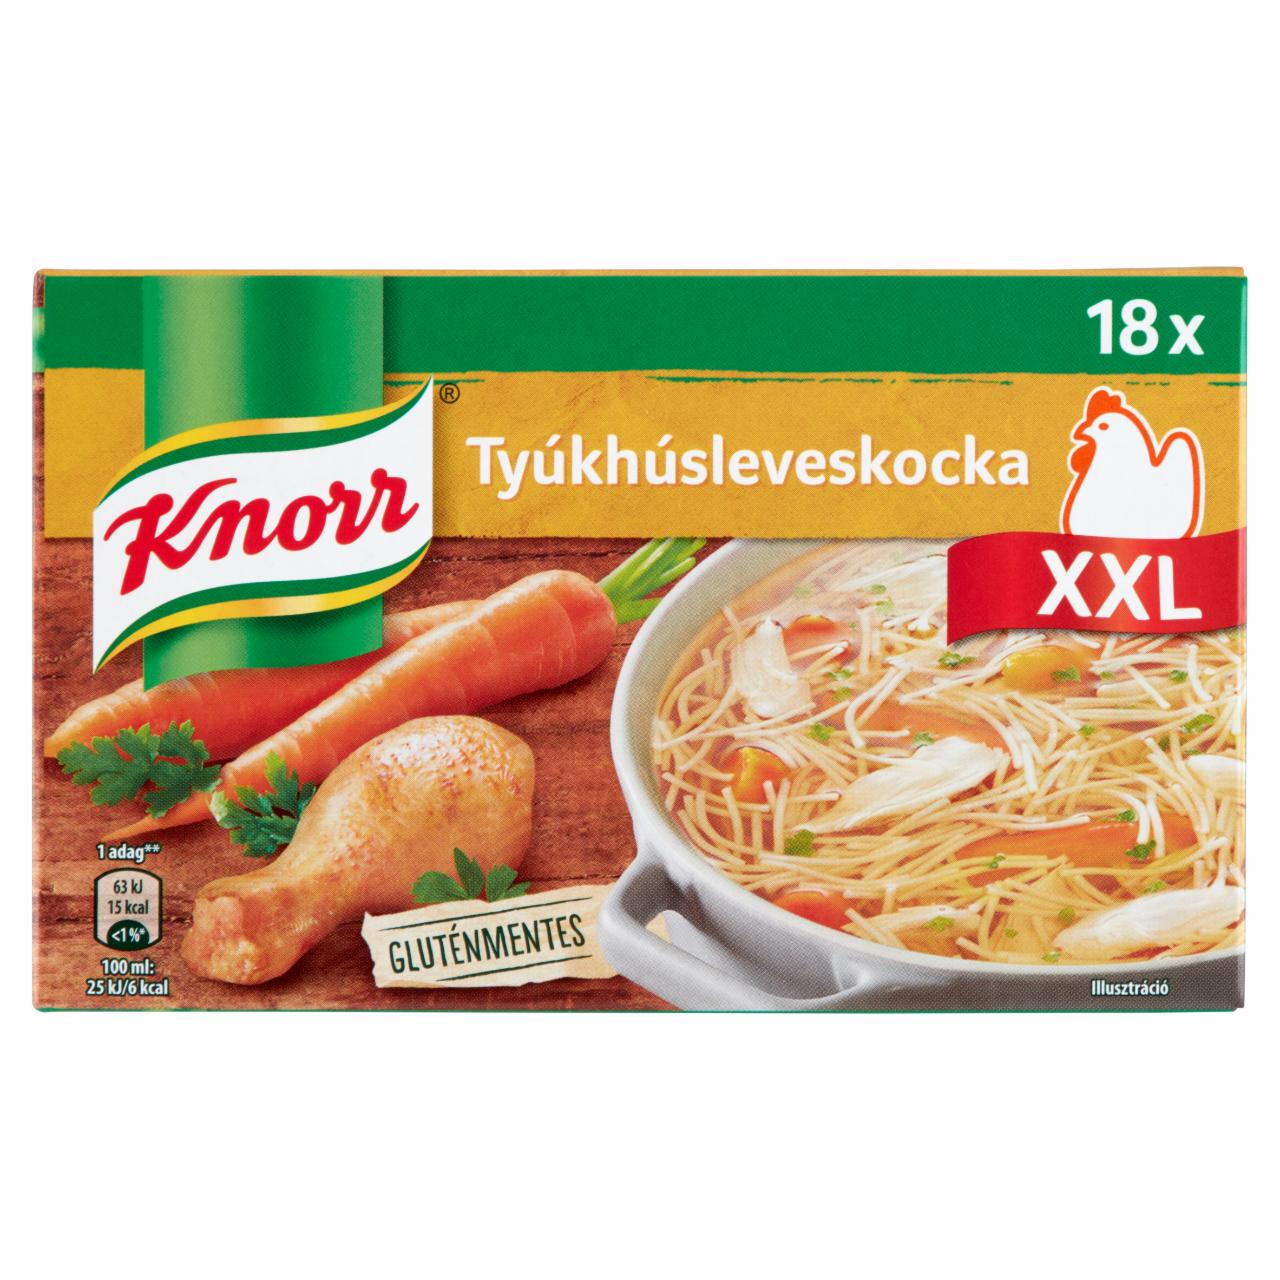 Képek - Knorr XXL tyúkhúsleveskocka 18 x 10 g (180 g)